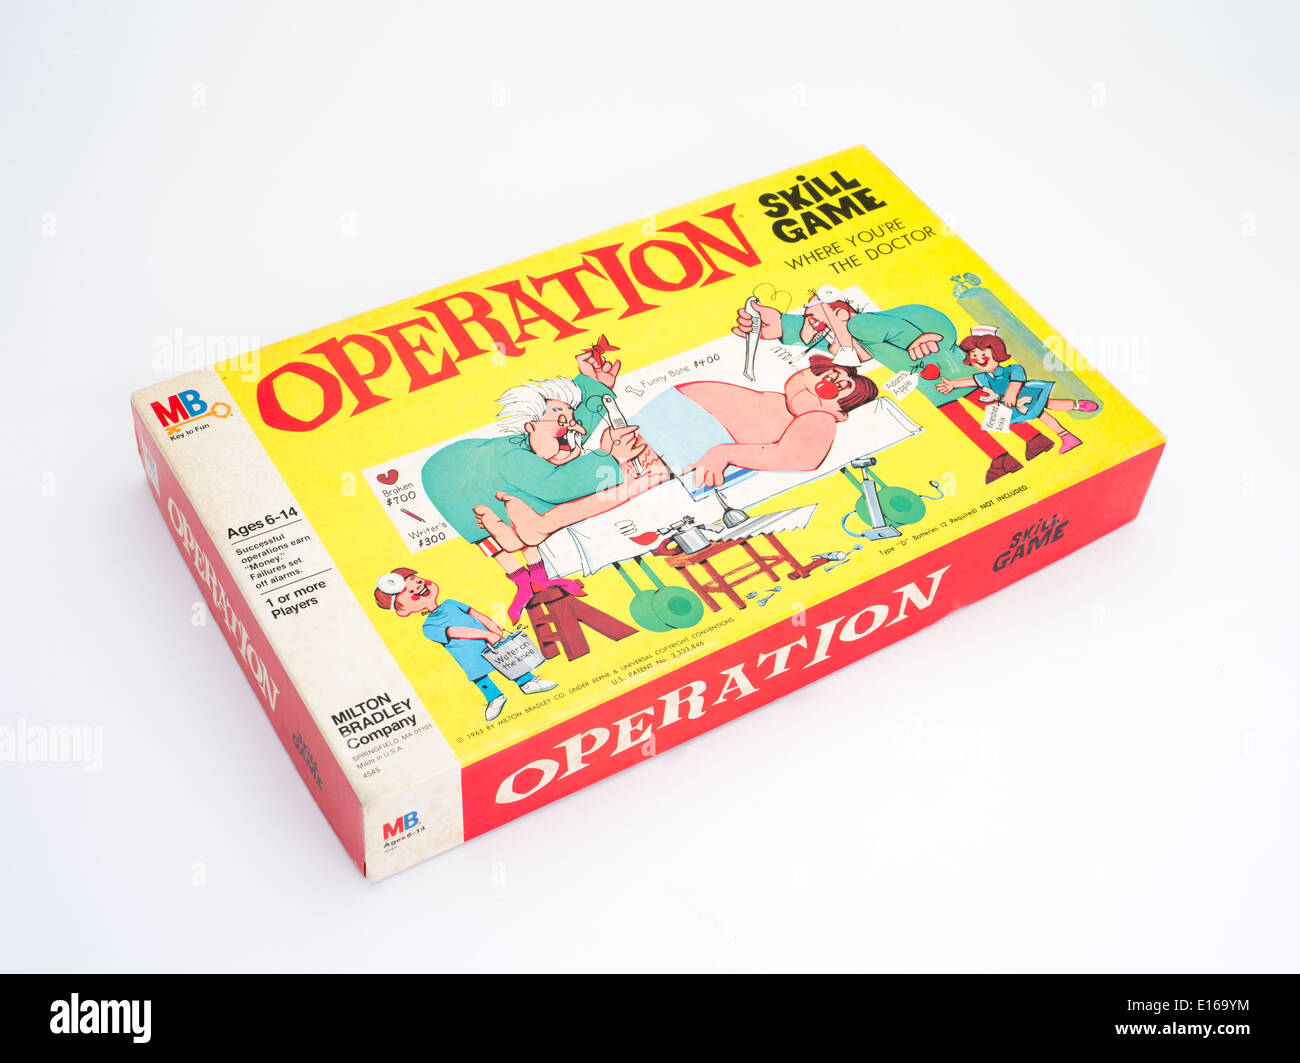 Betrieb Kinderspiel von Milton Bradley 1965 Stockfoto